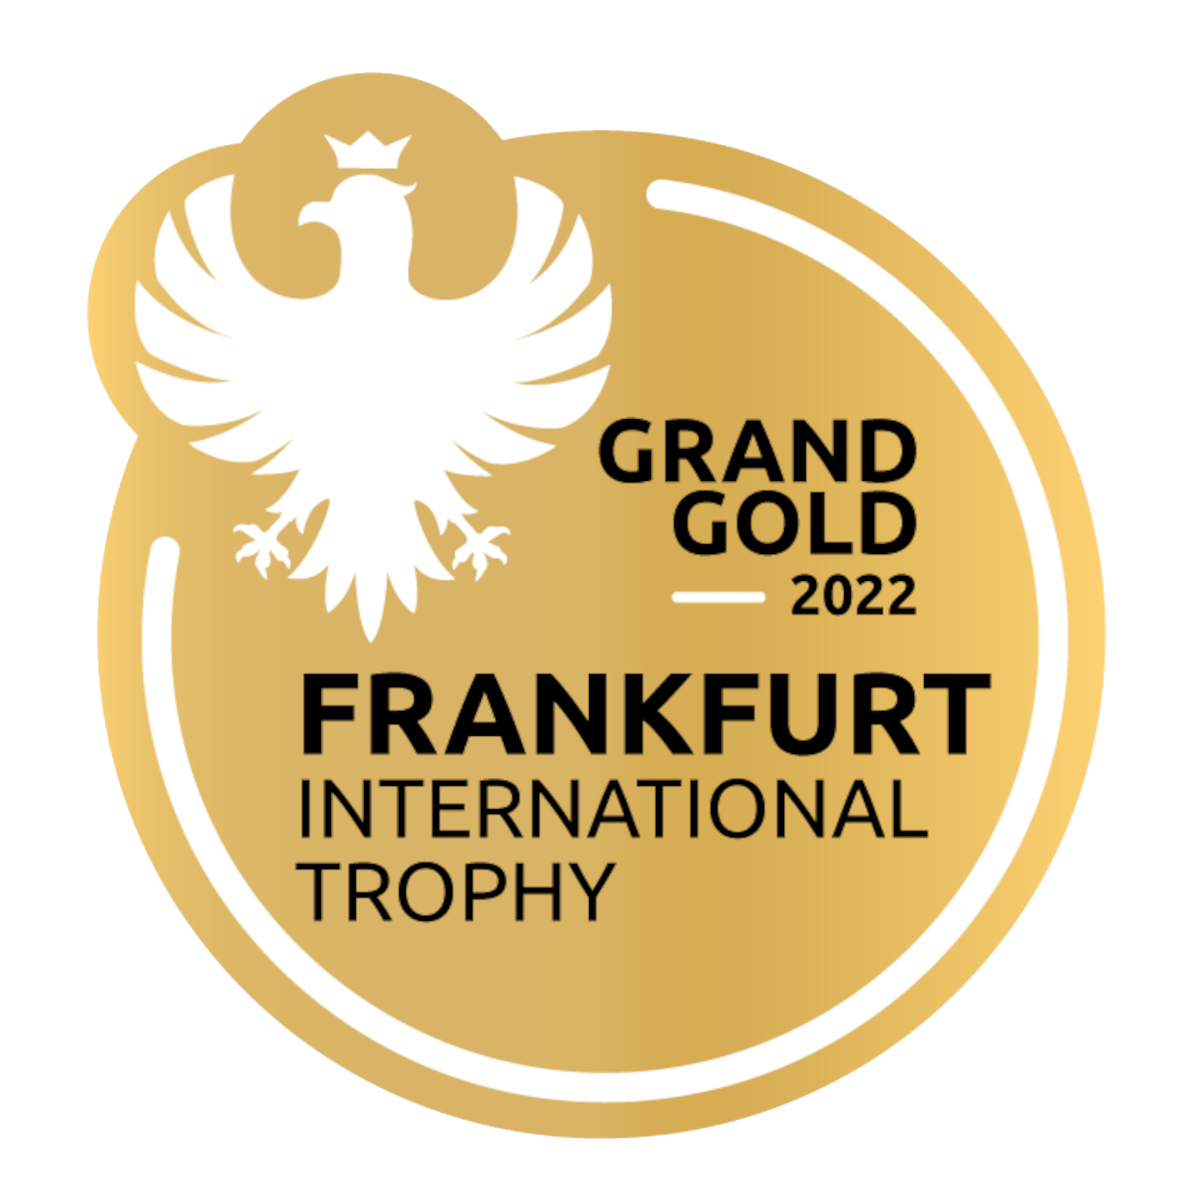 Frankfurt International Trophy 2022 – Grand Gold